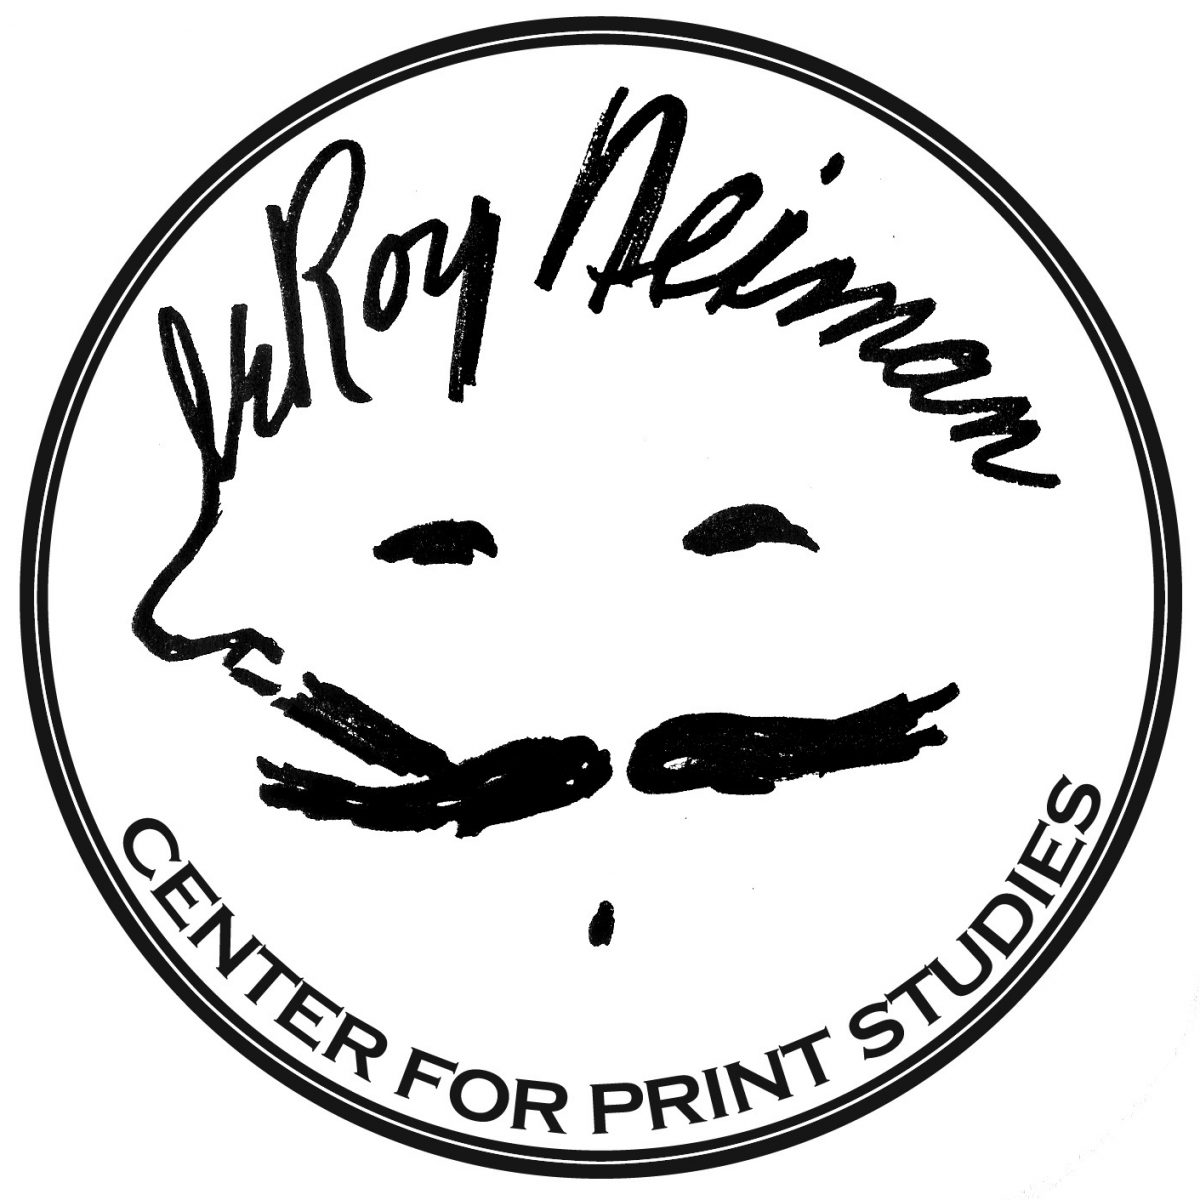 LeRoy Neiman Center for Print Studies